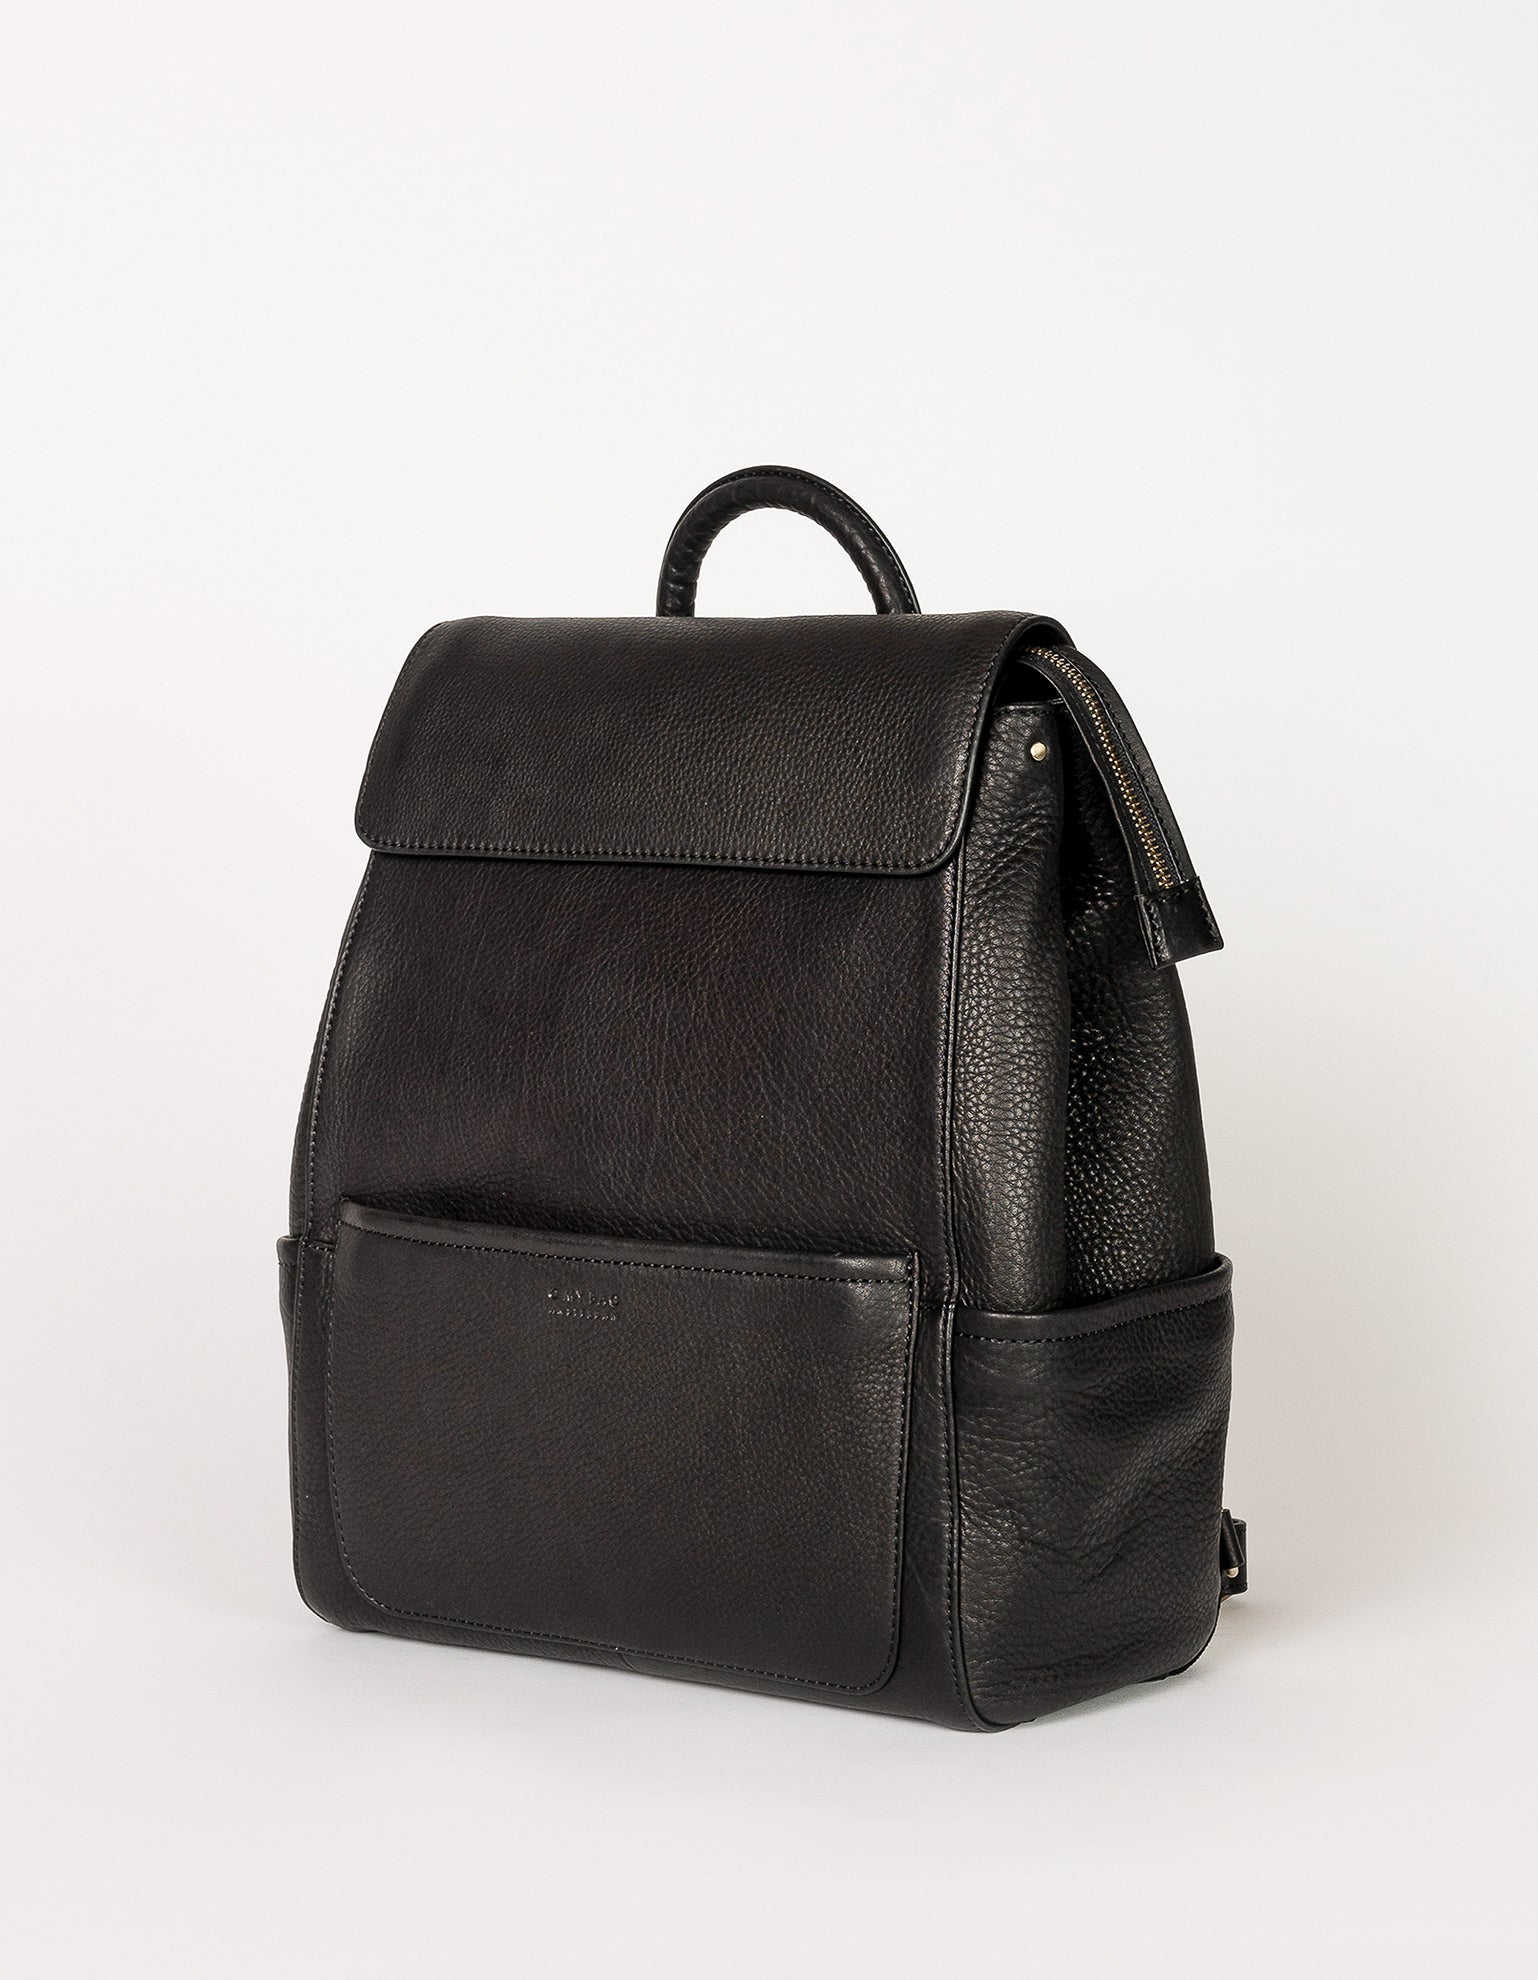 Black Leather backpack. Side product image.